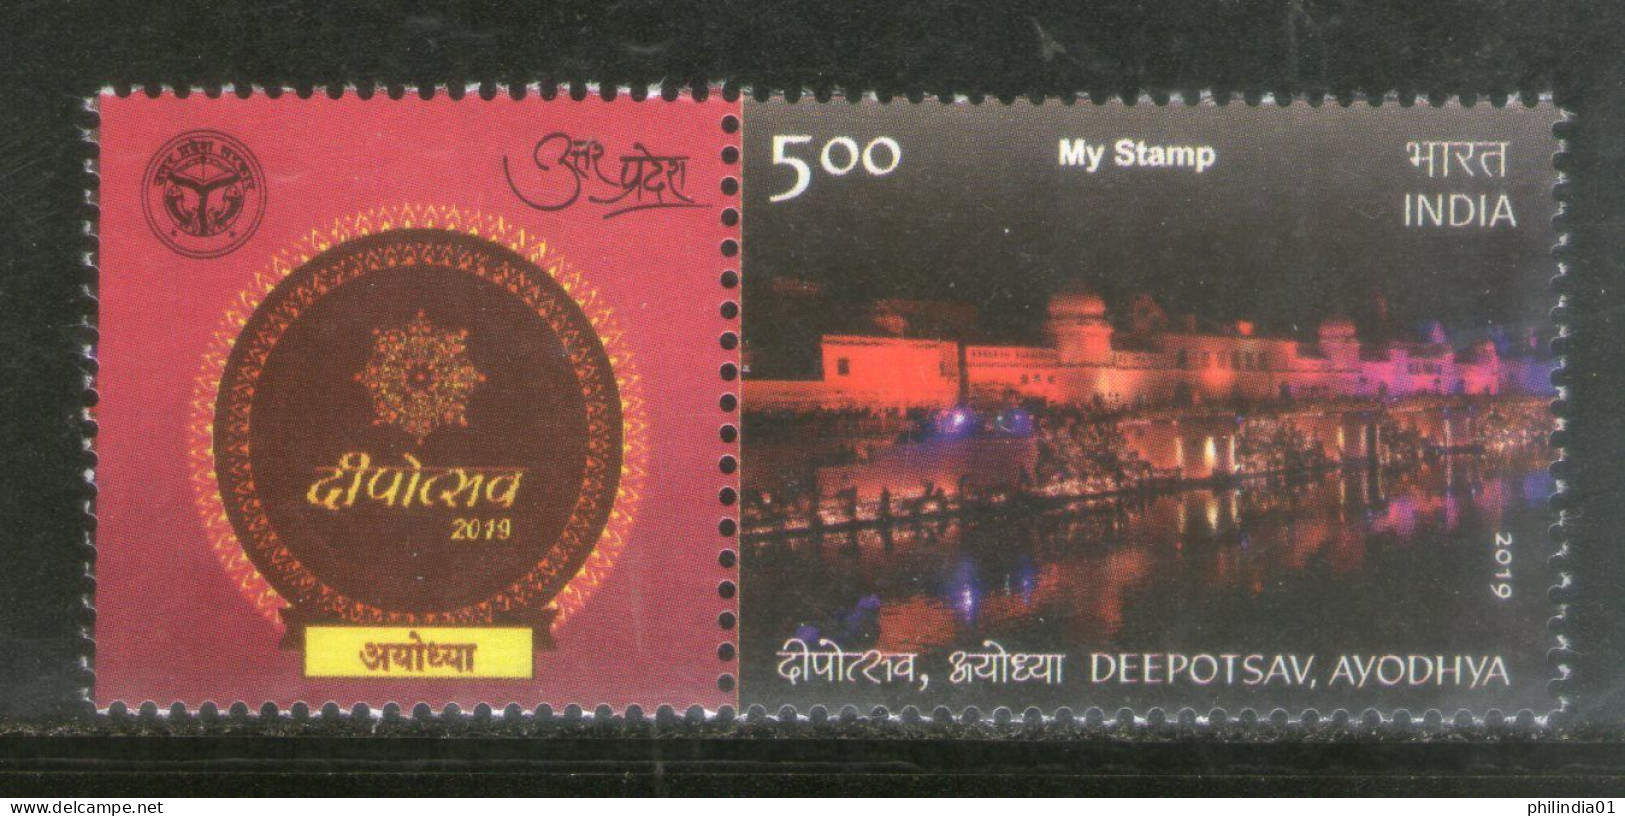 India 2019 Ayodhya Deepotsav Ram Janmabhumi Hindu Mythology My Stamp MNH # M101 - Hinduism